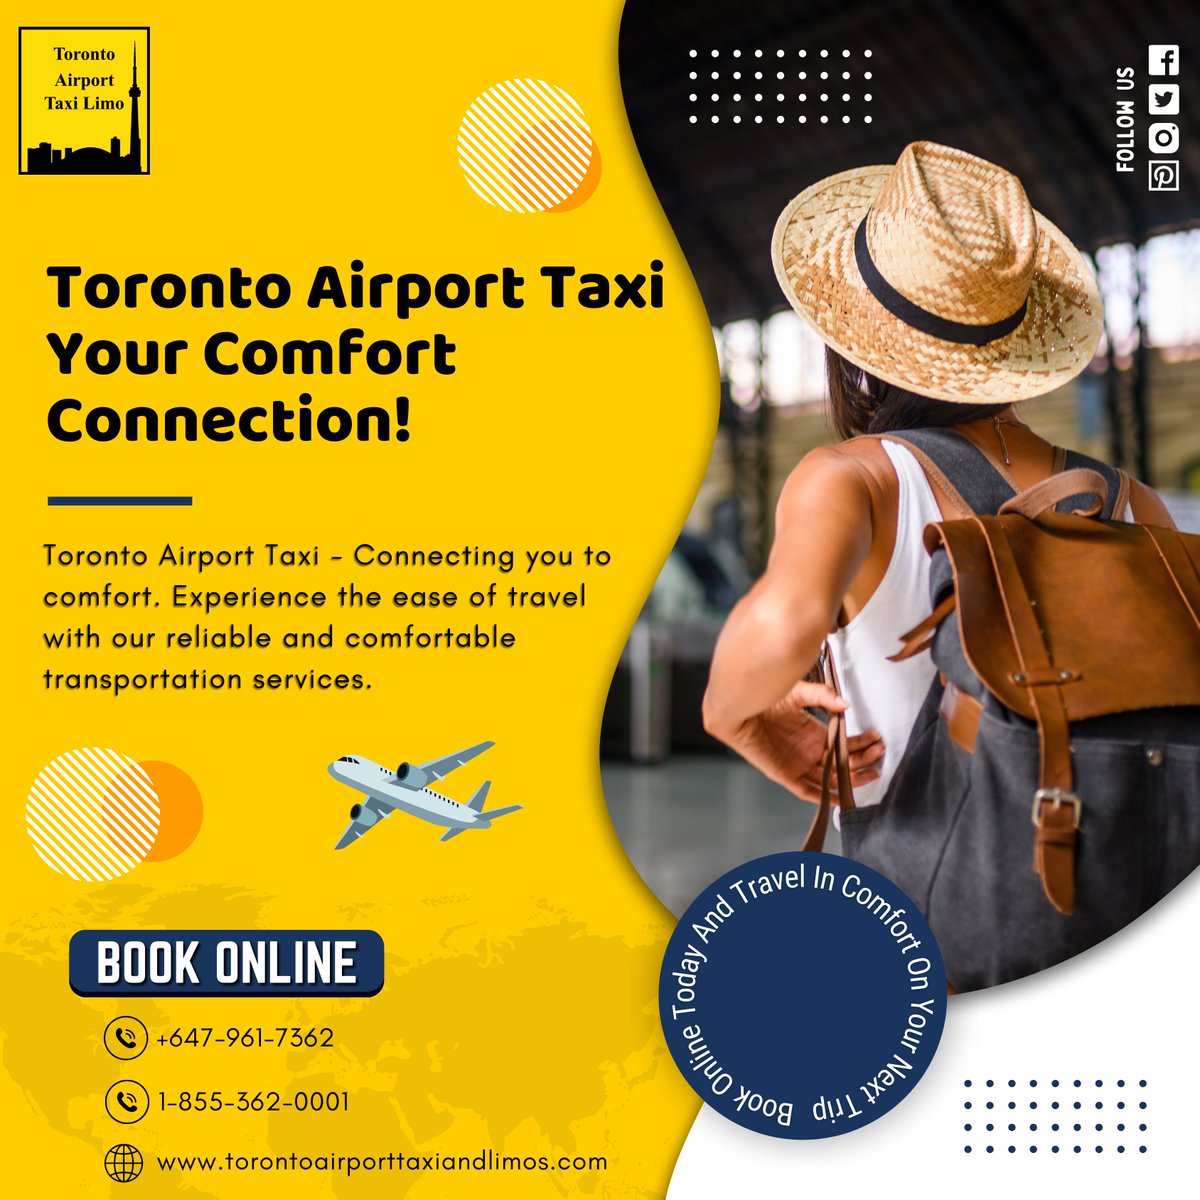 🚖✈️ Toronto Airport Taxi Your Comfort Connection ✈️🚖

Embark on a journey of comfort with Toronto Airport Taxi! 🌟
.
#TorontoAirportTaxi #AirportTransportation #TravelComfort #SpecialArrival #PersonalizedExperience #TimeEfficientArrivals #FocusOnYourJourney #BookNow